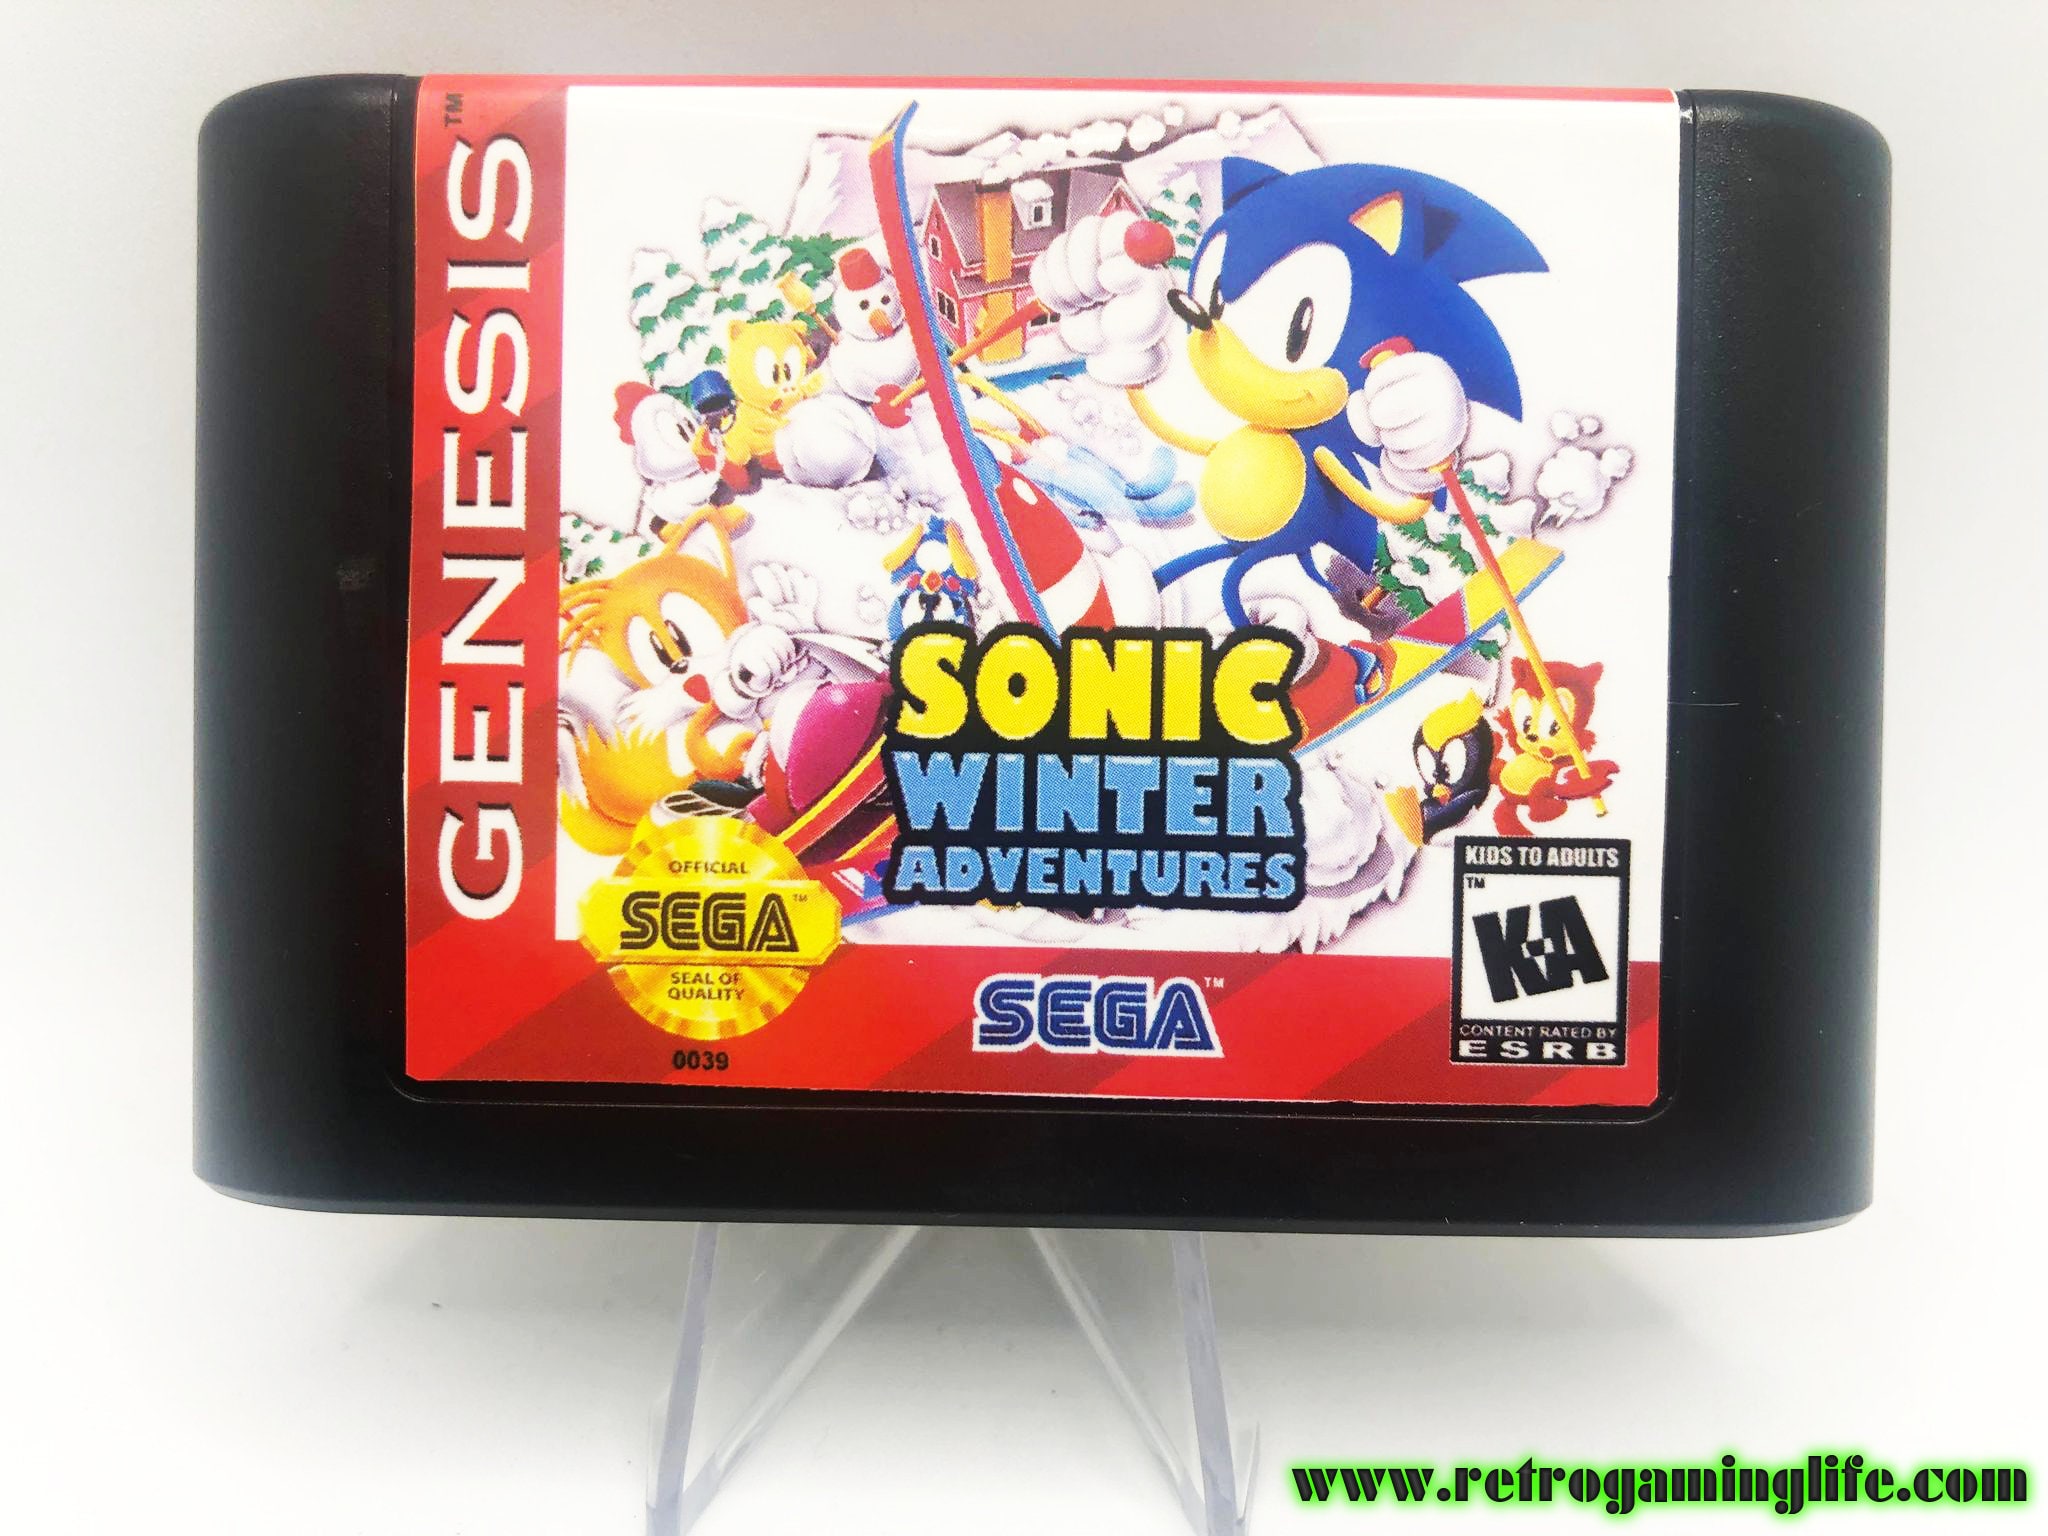 Sonic Classic Heroes (Sega Genesis) - Region Free Reproduction